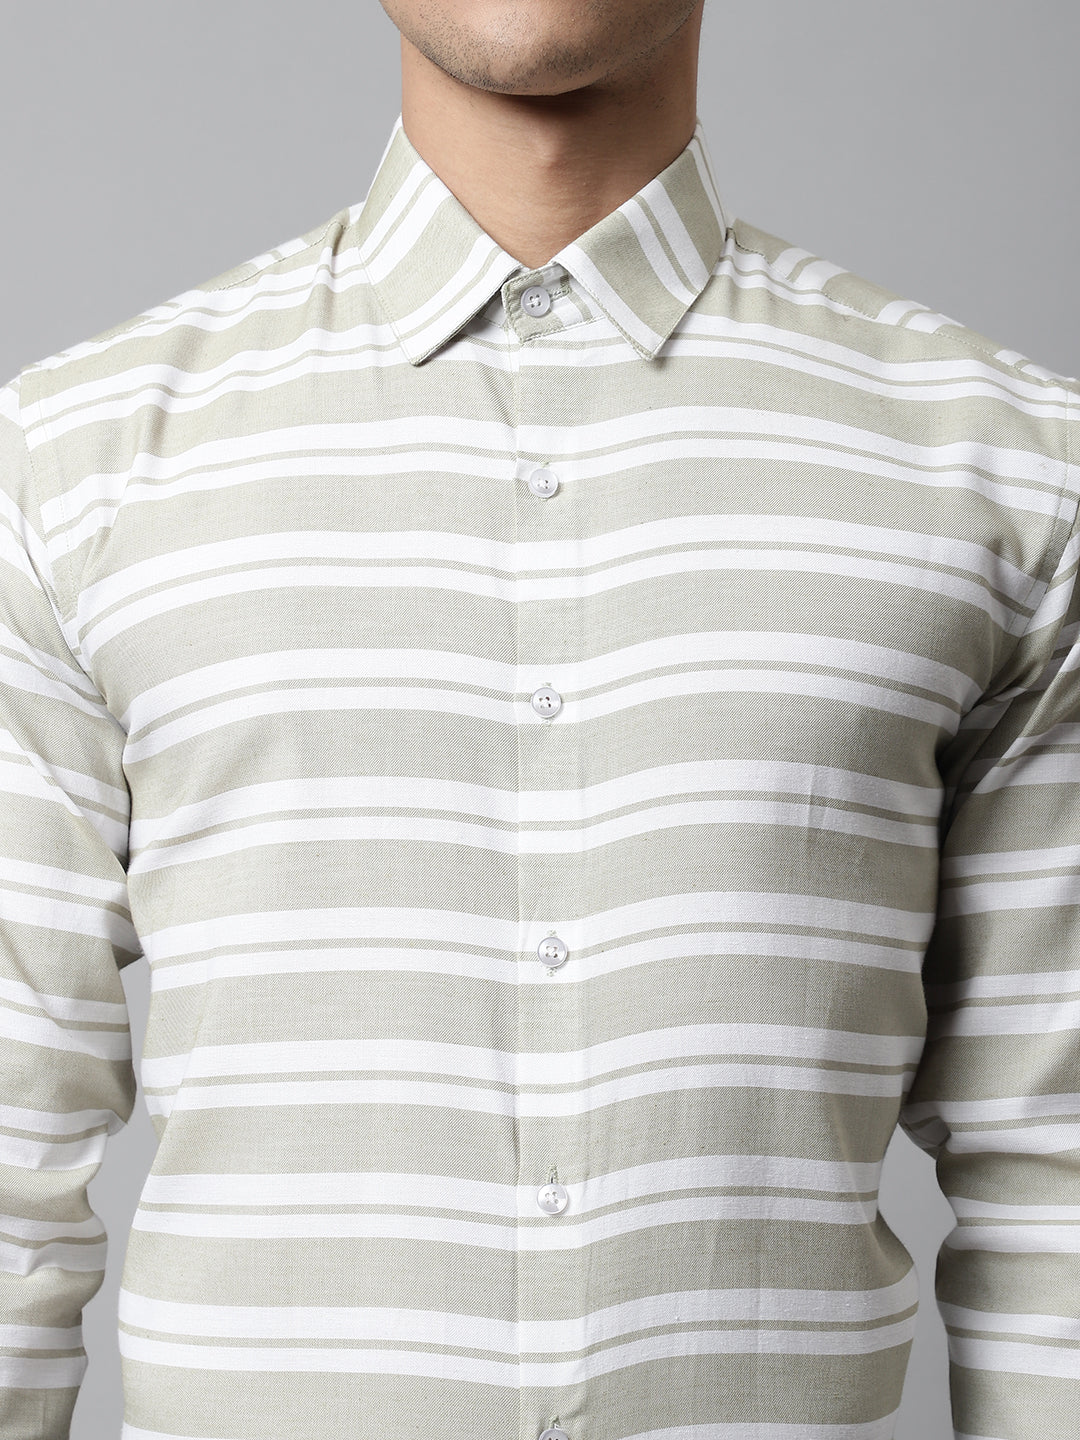 Men Pista Green Classic Horizontal Striped Formal Shirt ( SF 850Pista )